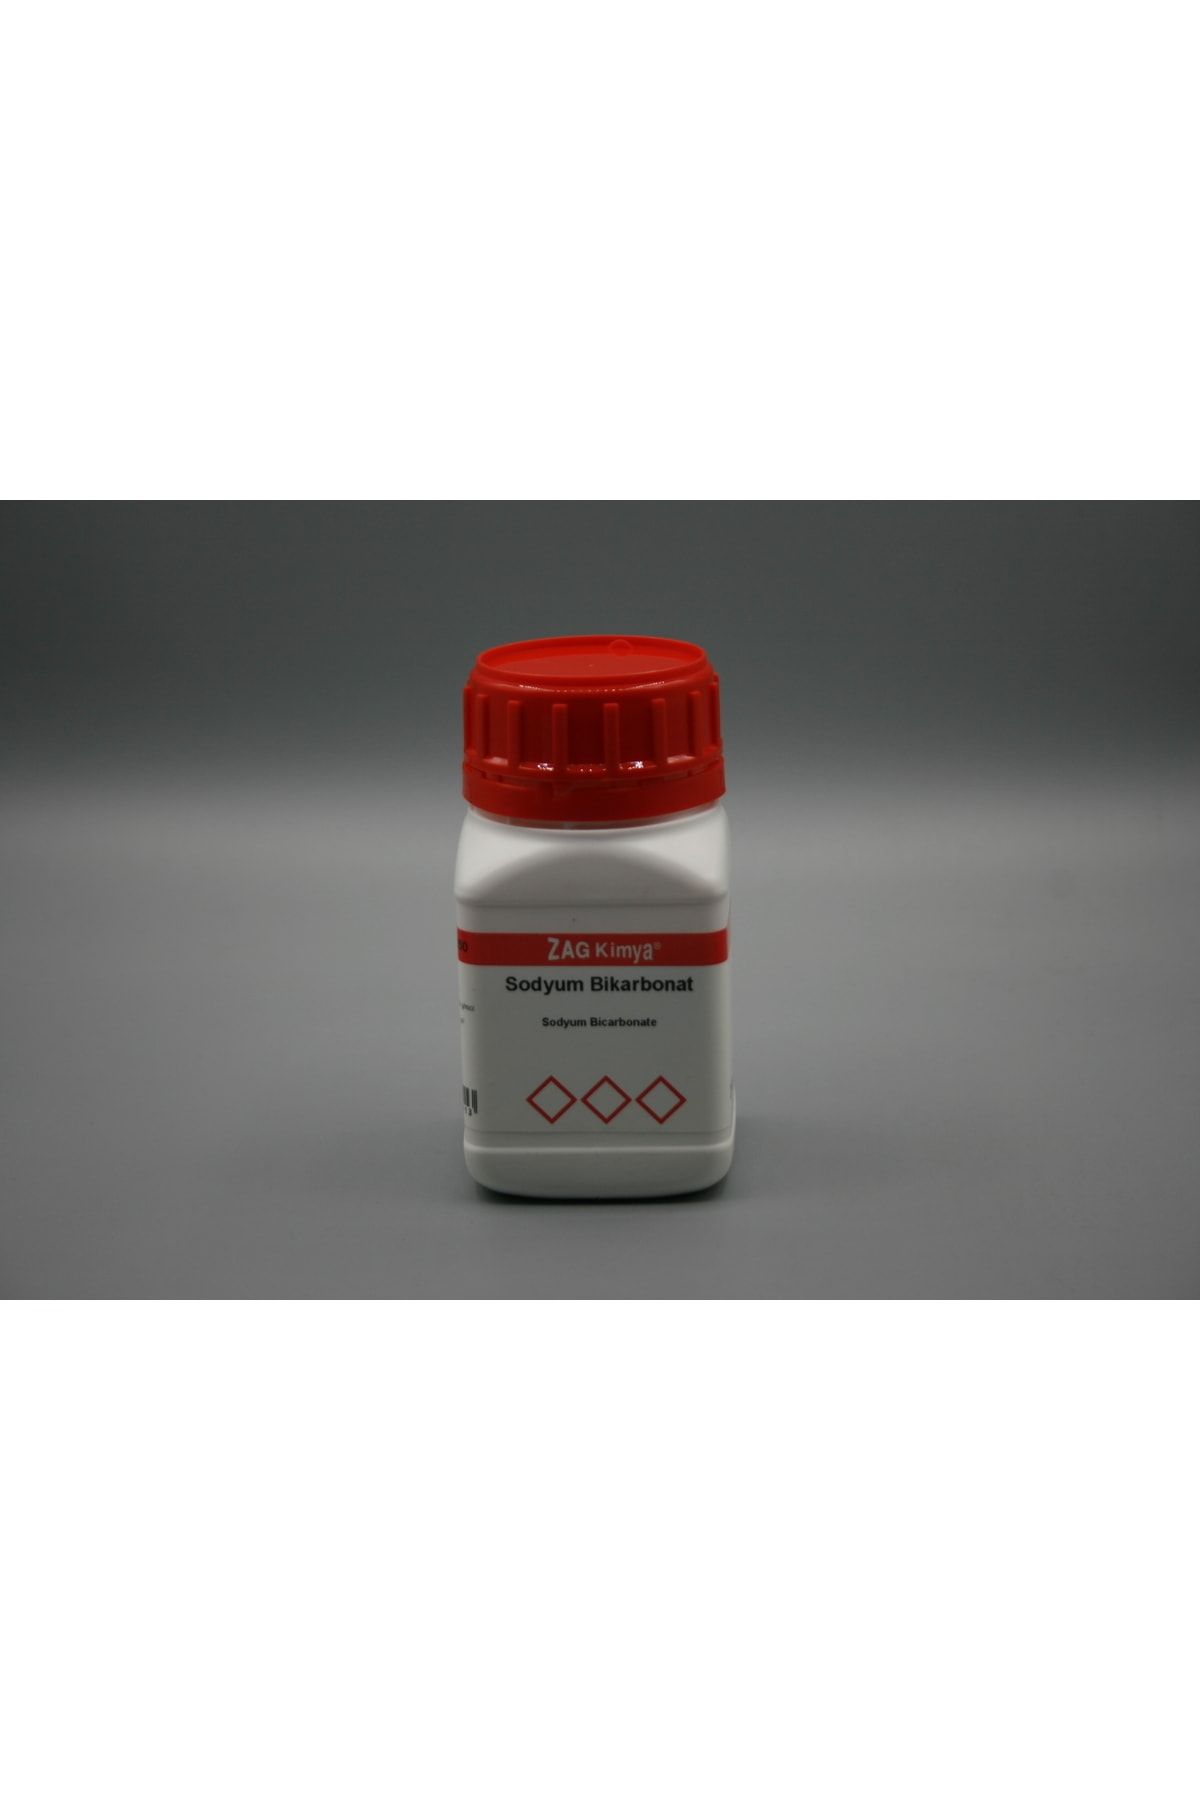 ZAG KİMYA Sodyum Bikarbonat %99 Chem Pure - 250 gr